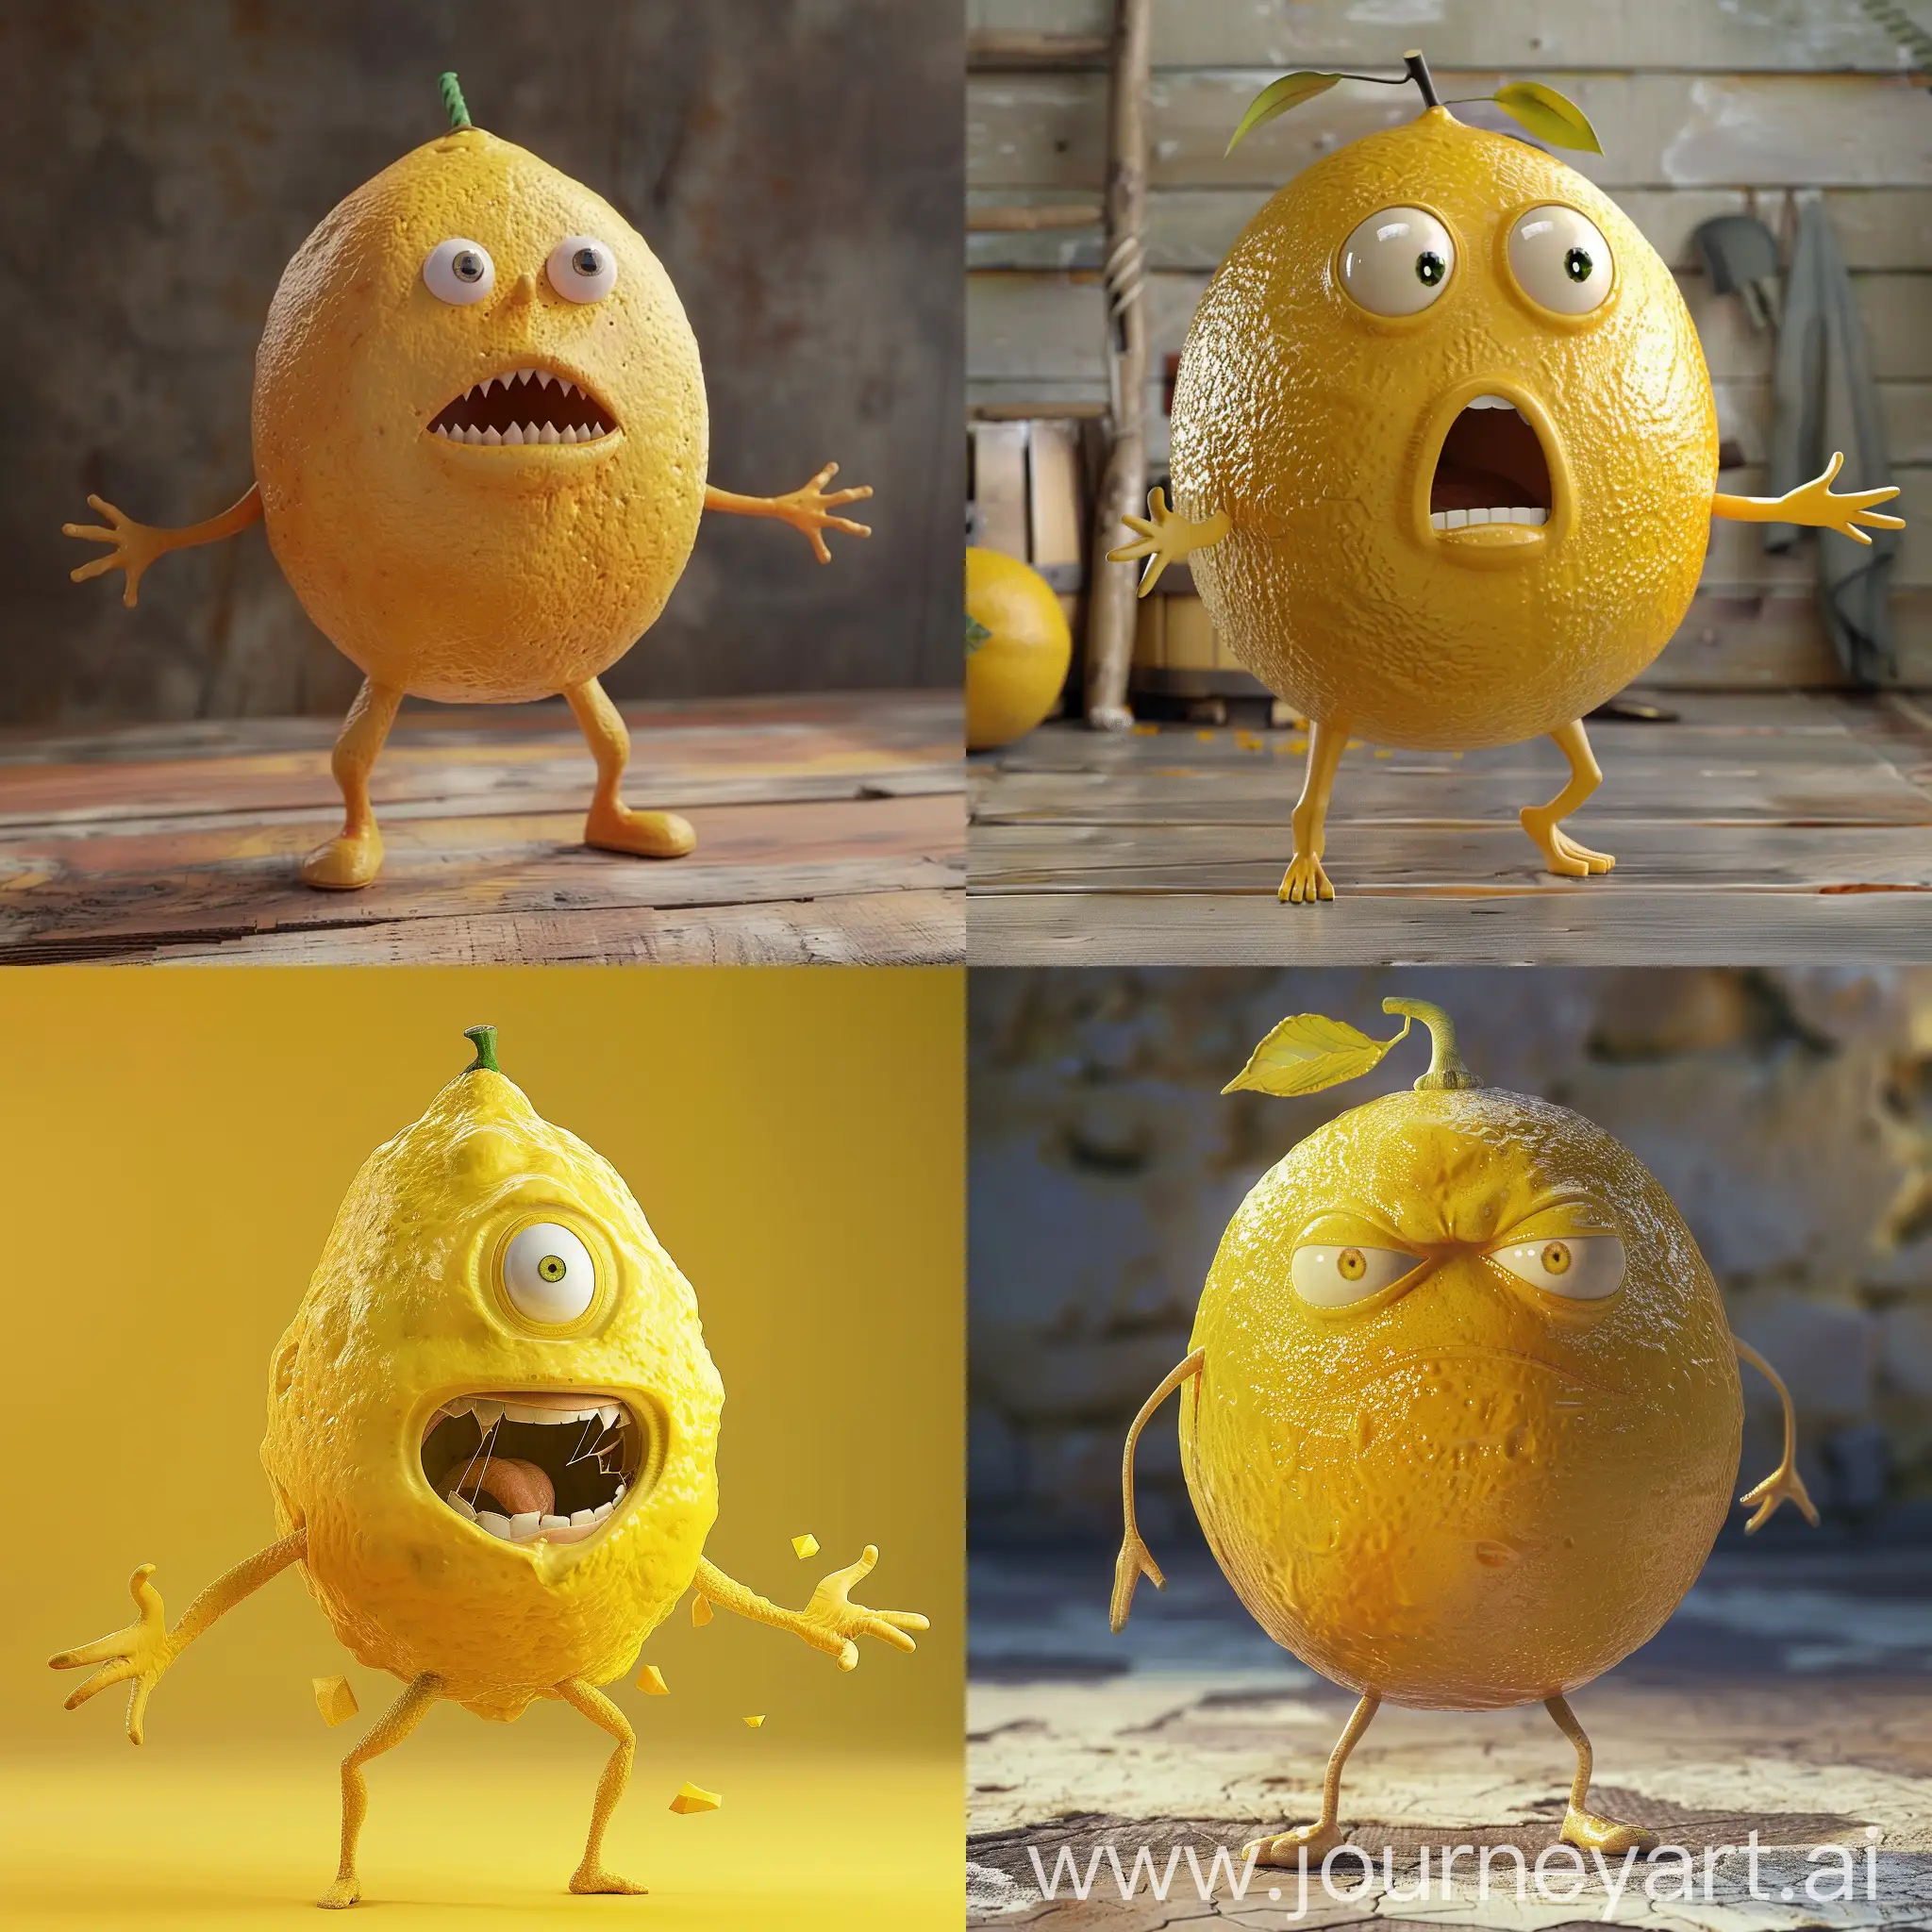 Energetic-Talking-Lemon-Character-in-Dynamic-3D-Animation